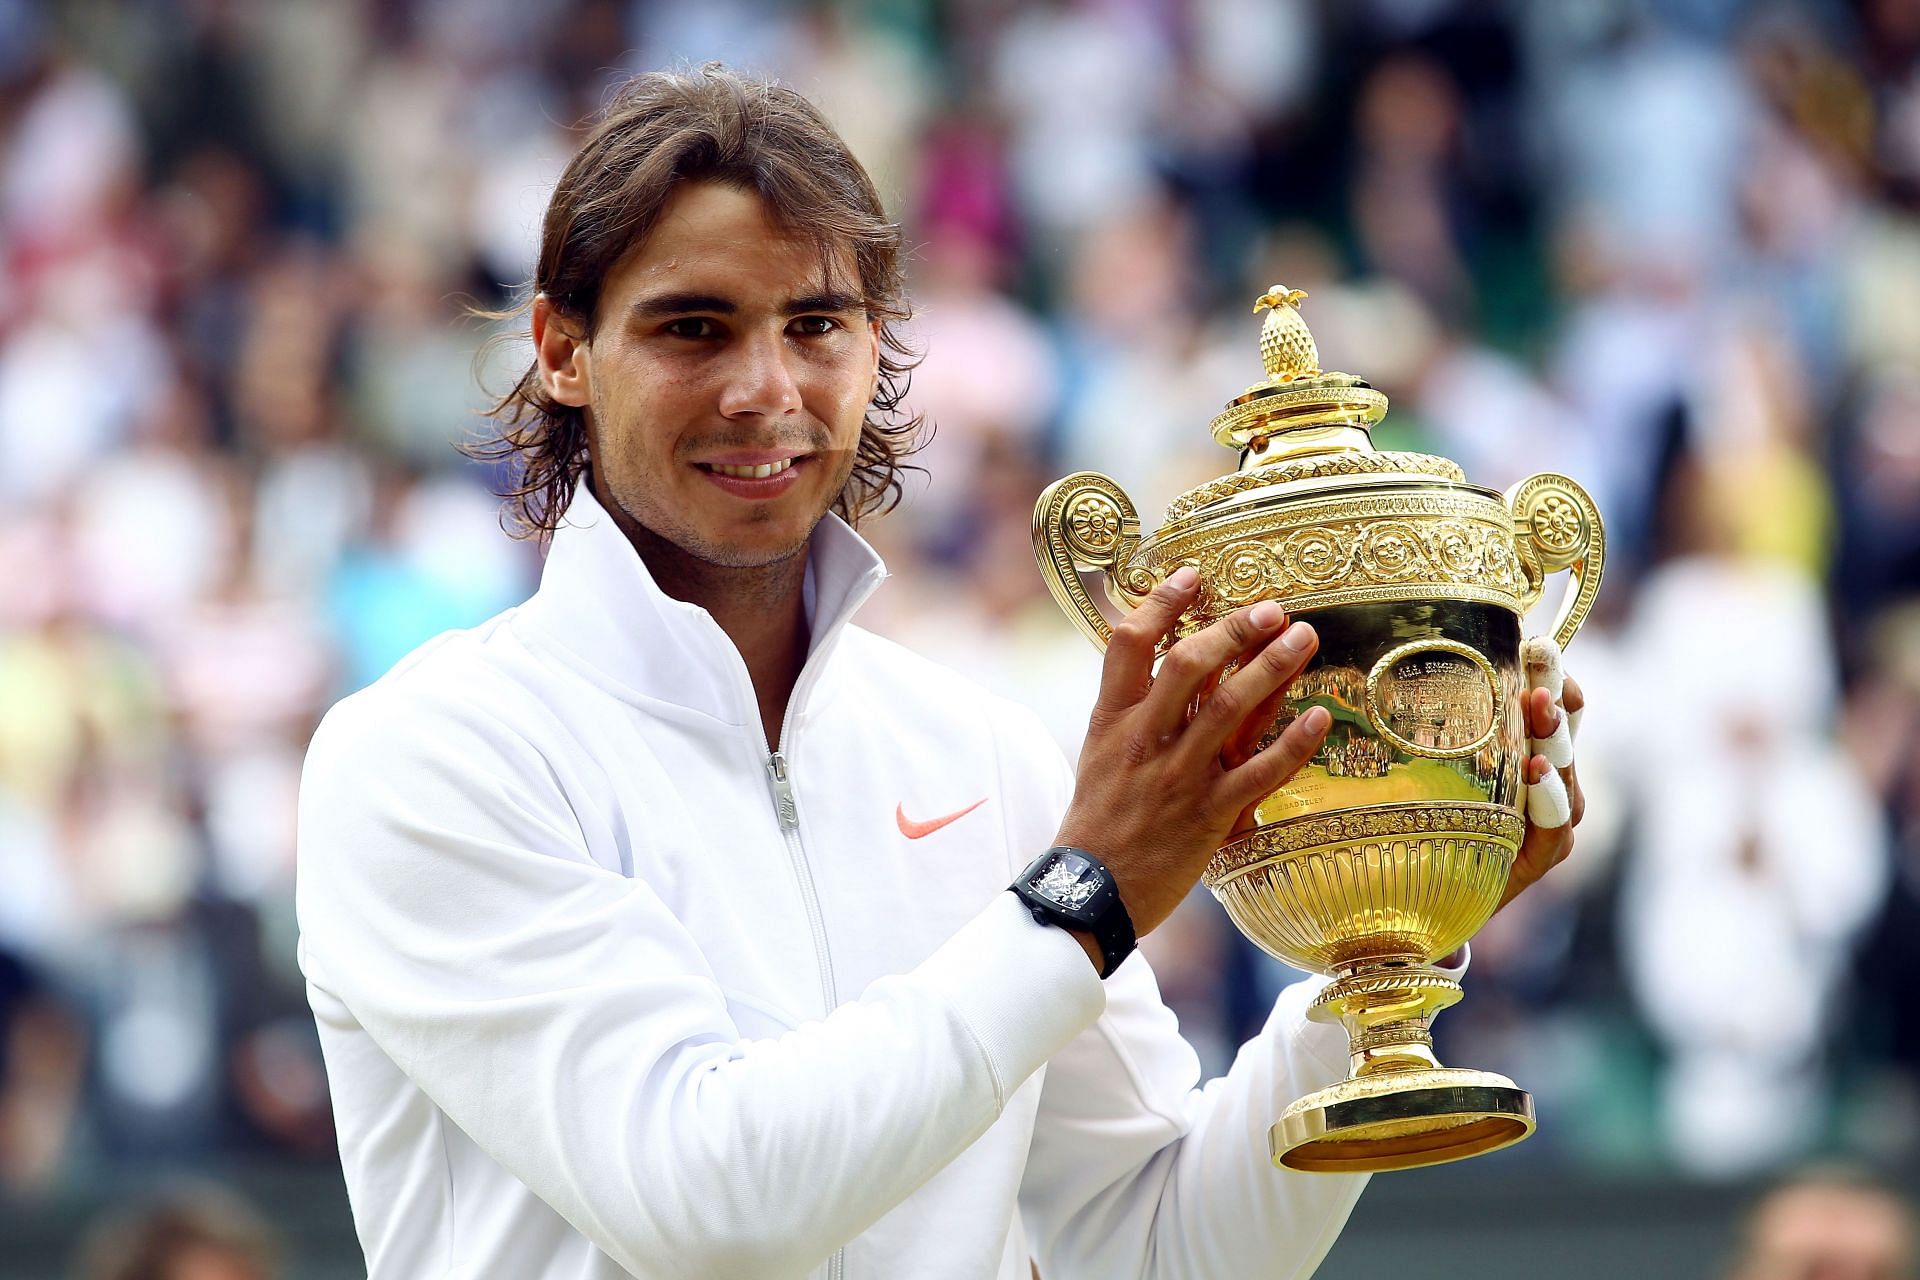 Rafael Nadal won the Wimbledon Championships in 2008 and 2010